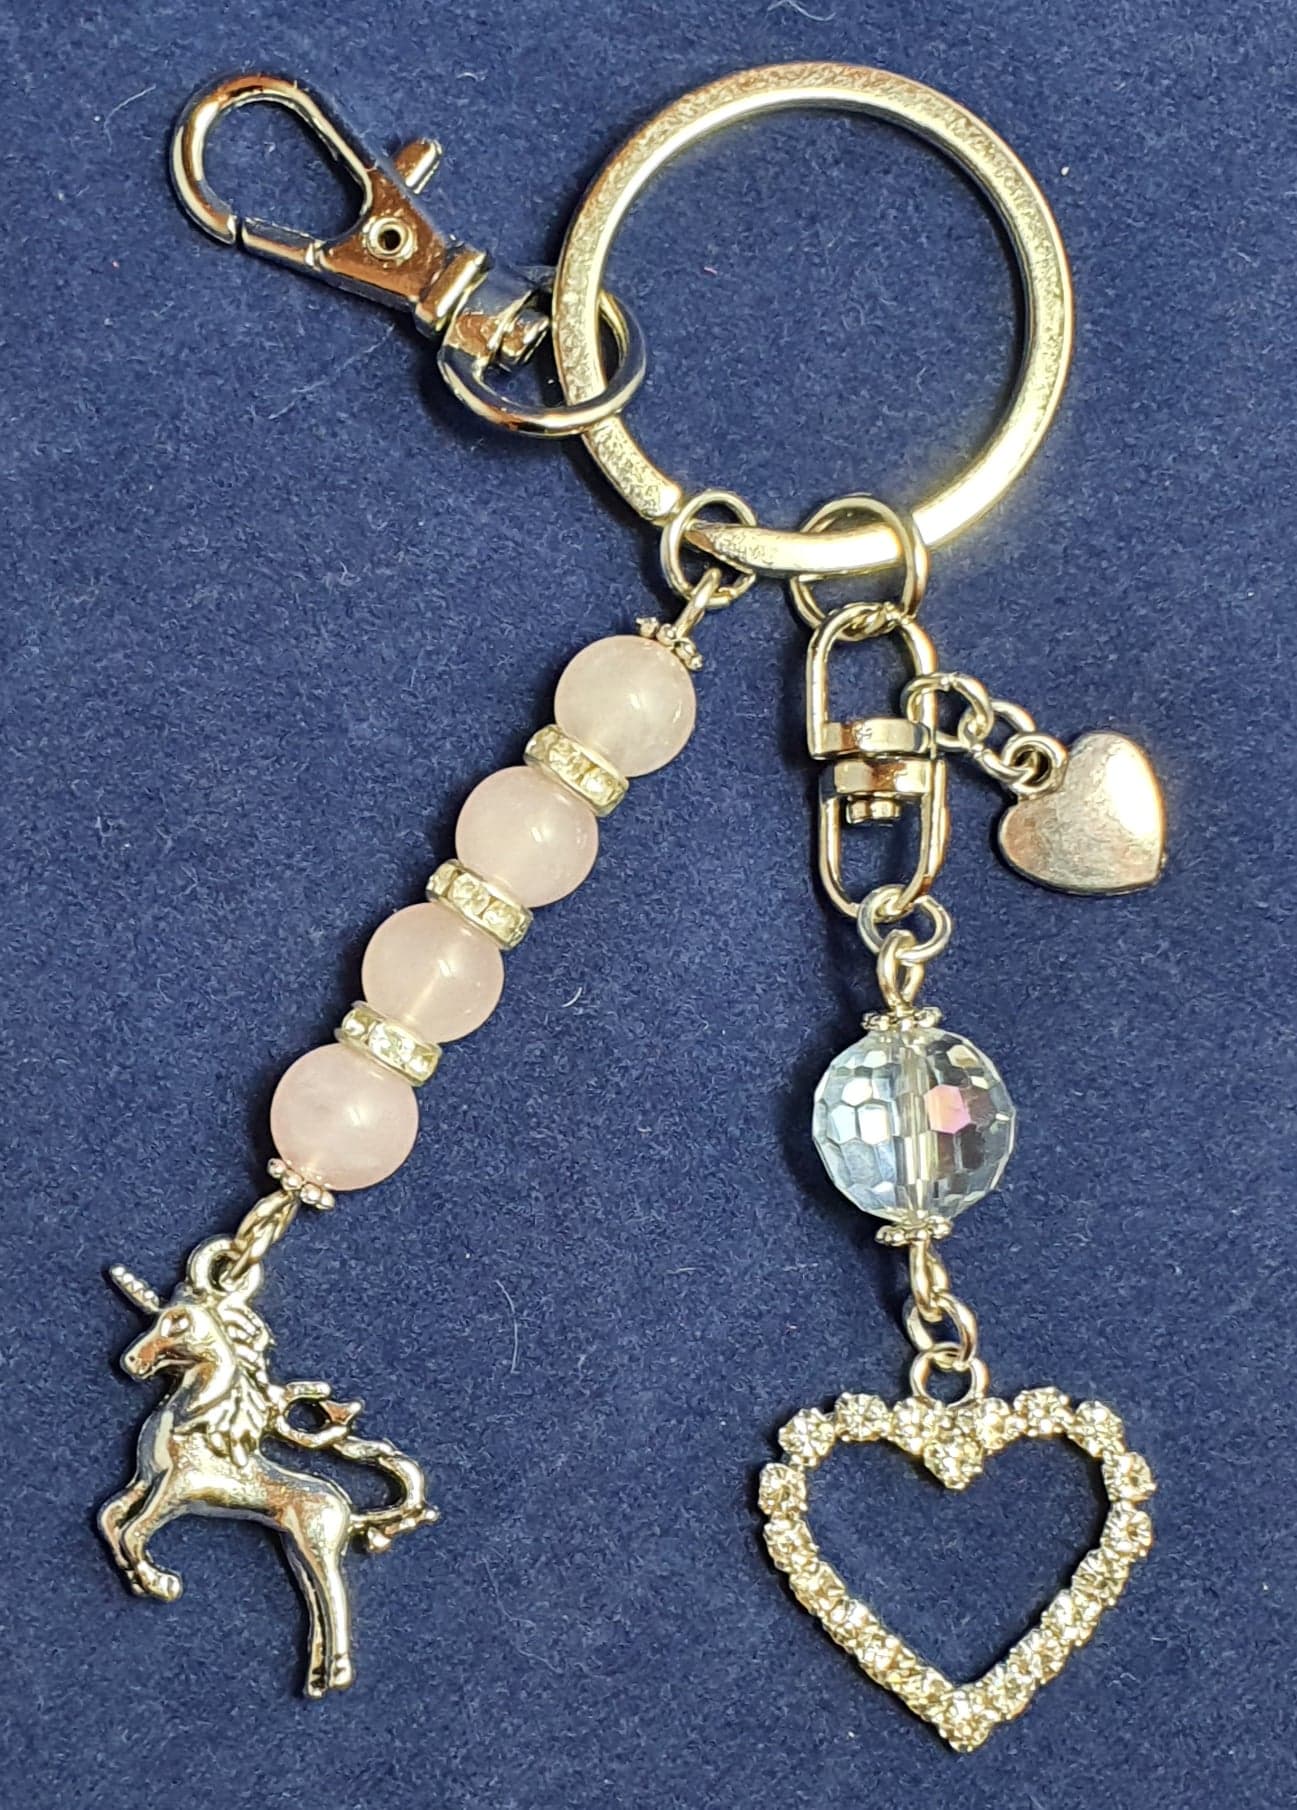 Unicorn theme key ring / bag charm. Rose Quartz with diamante heart